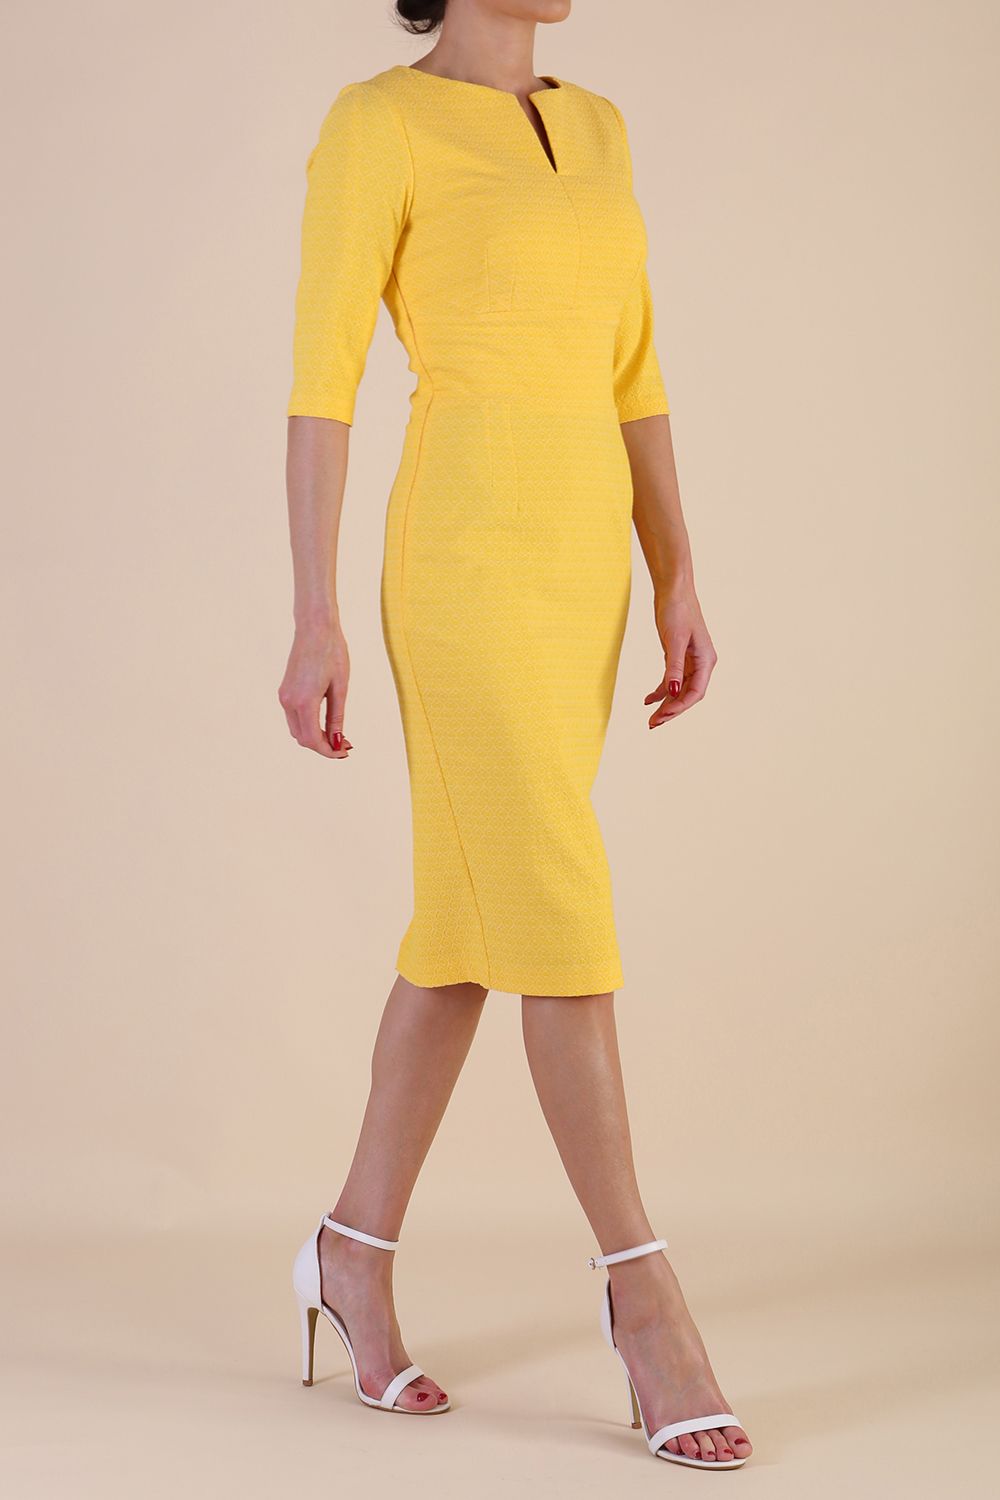 Model wearing diva catwalk Harriet Elbow Sleeve Knee Lenght Jacquard Dress in Lemon colour side